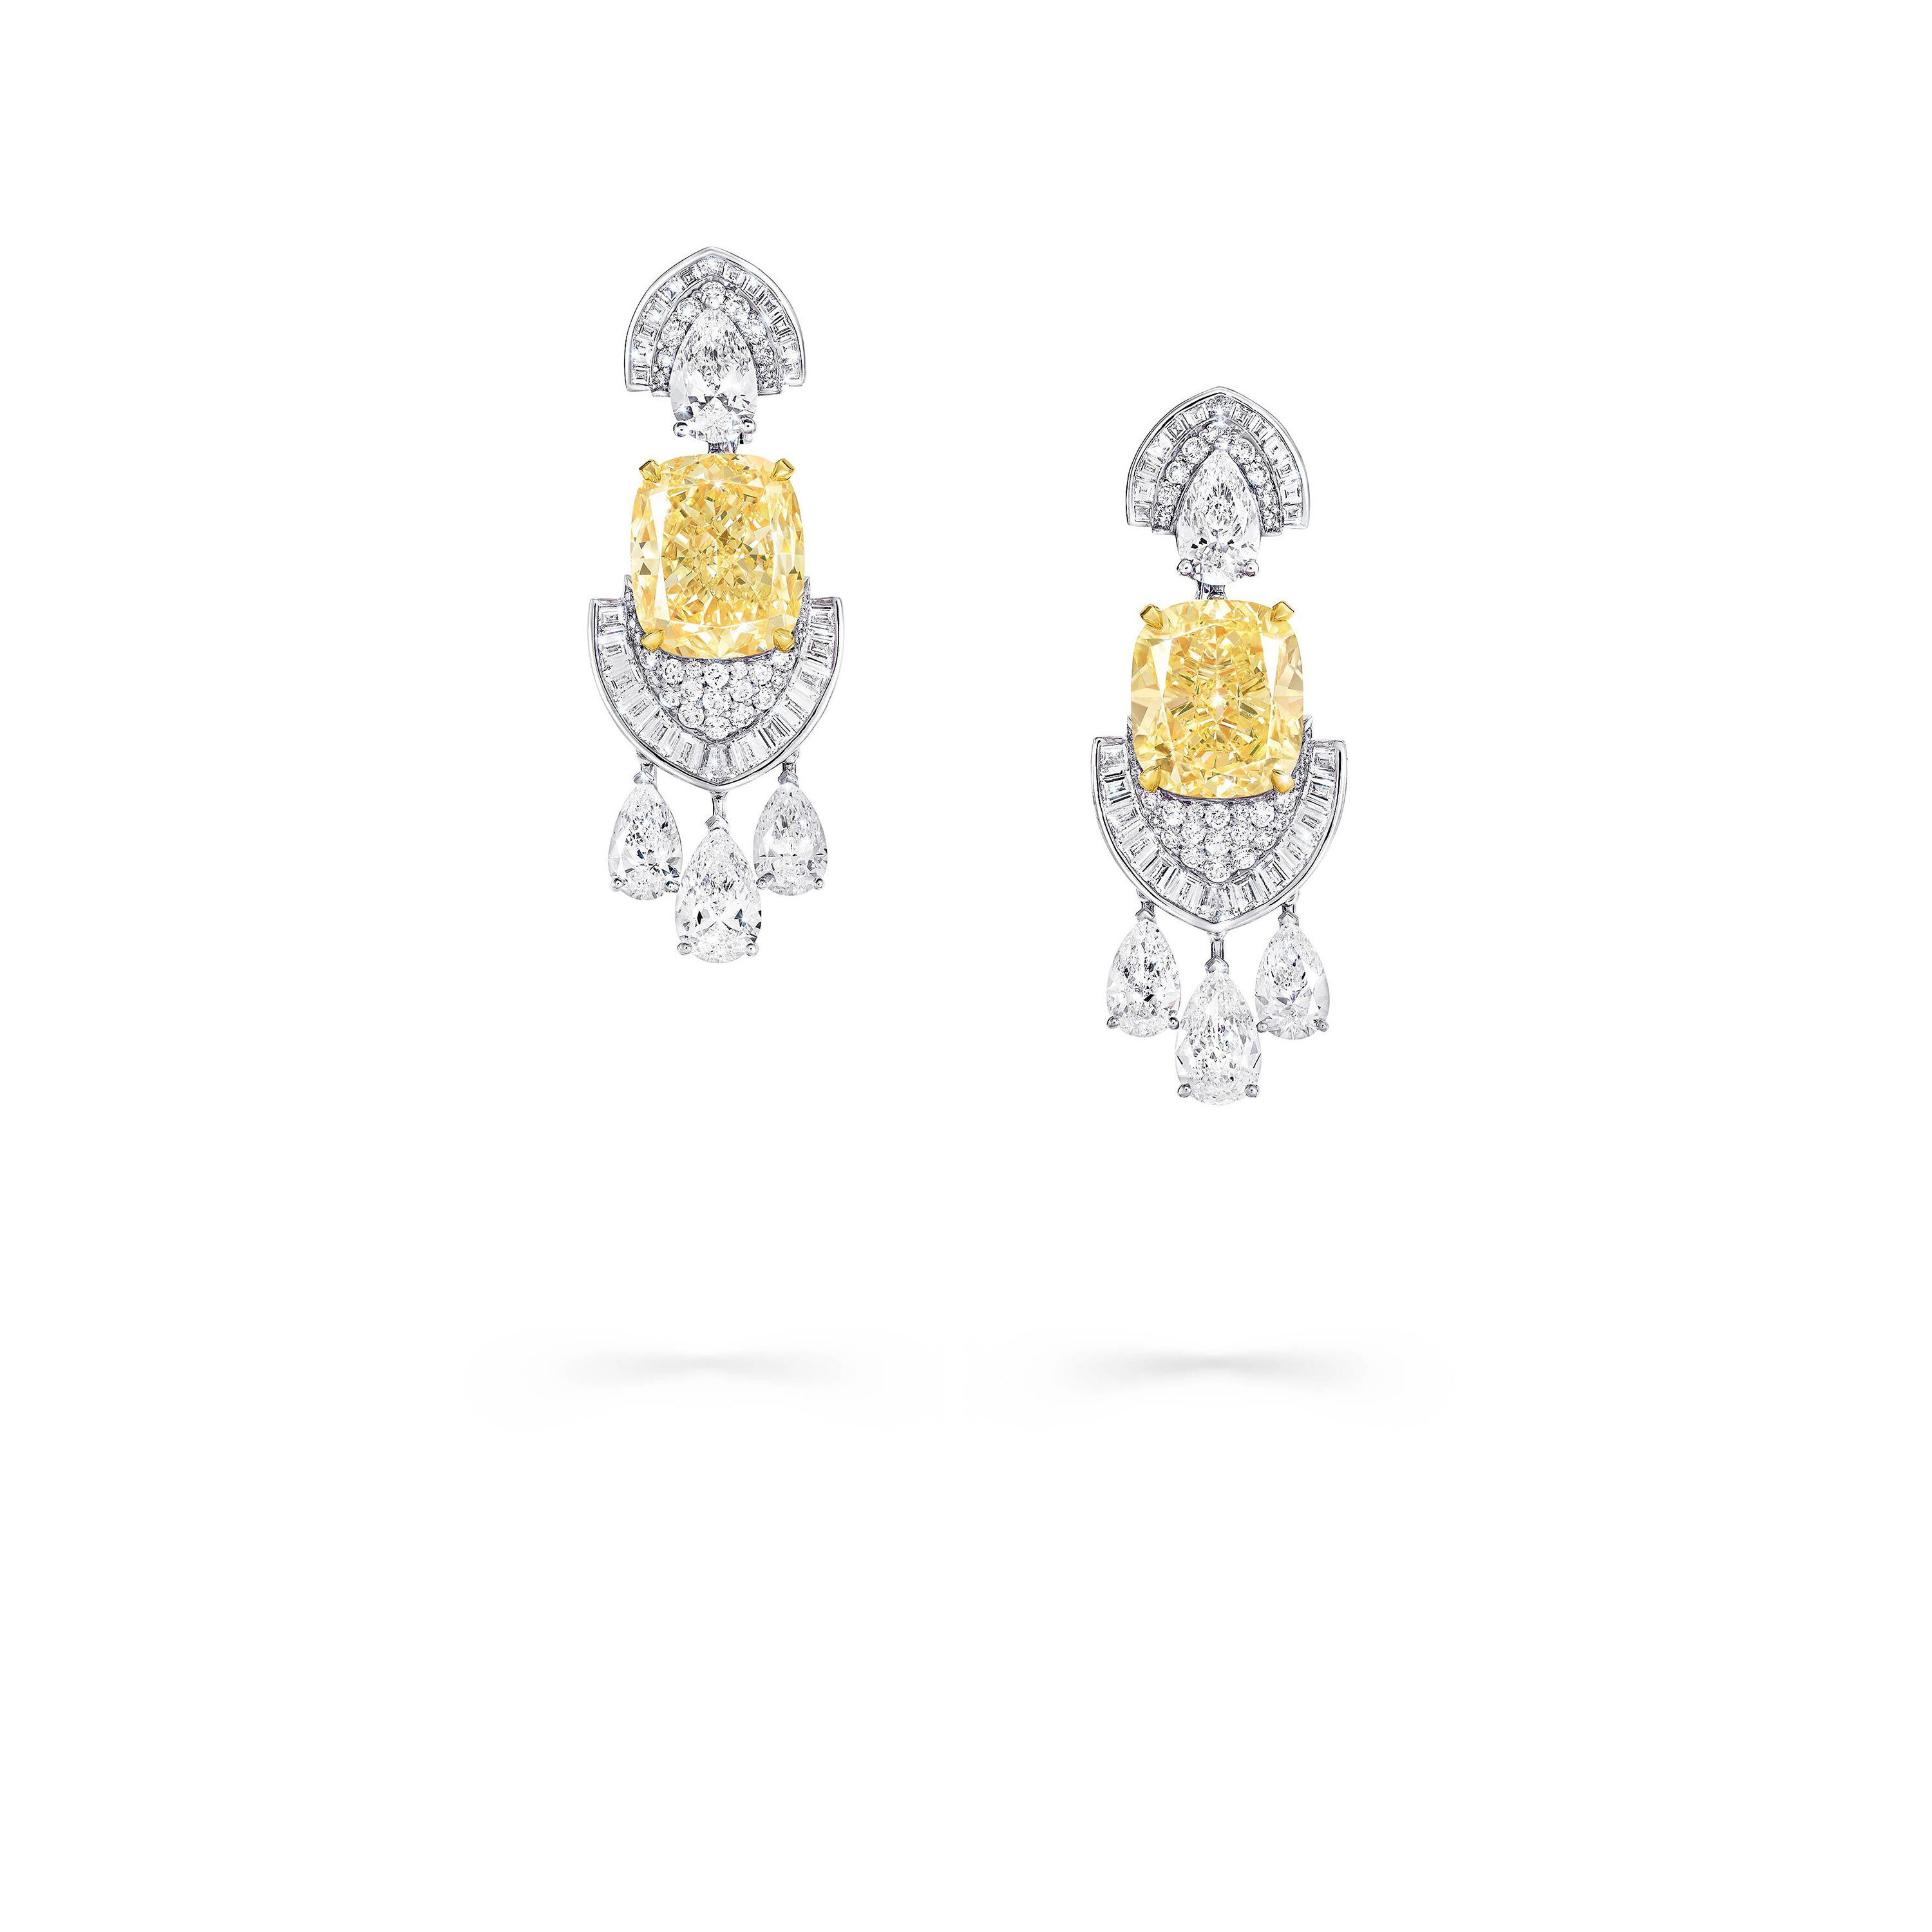 Graff yellow and white diamond high jewellery earrings